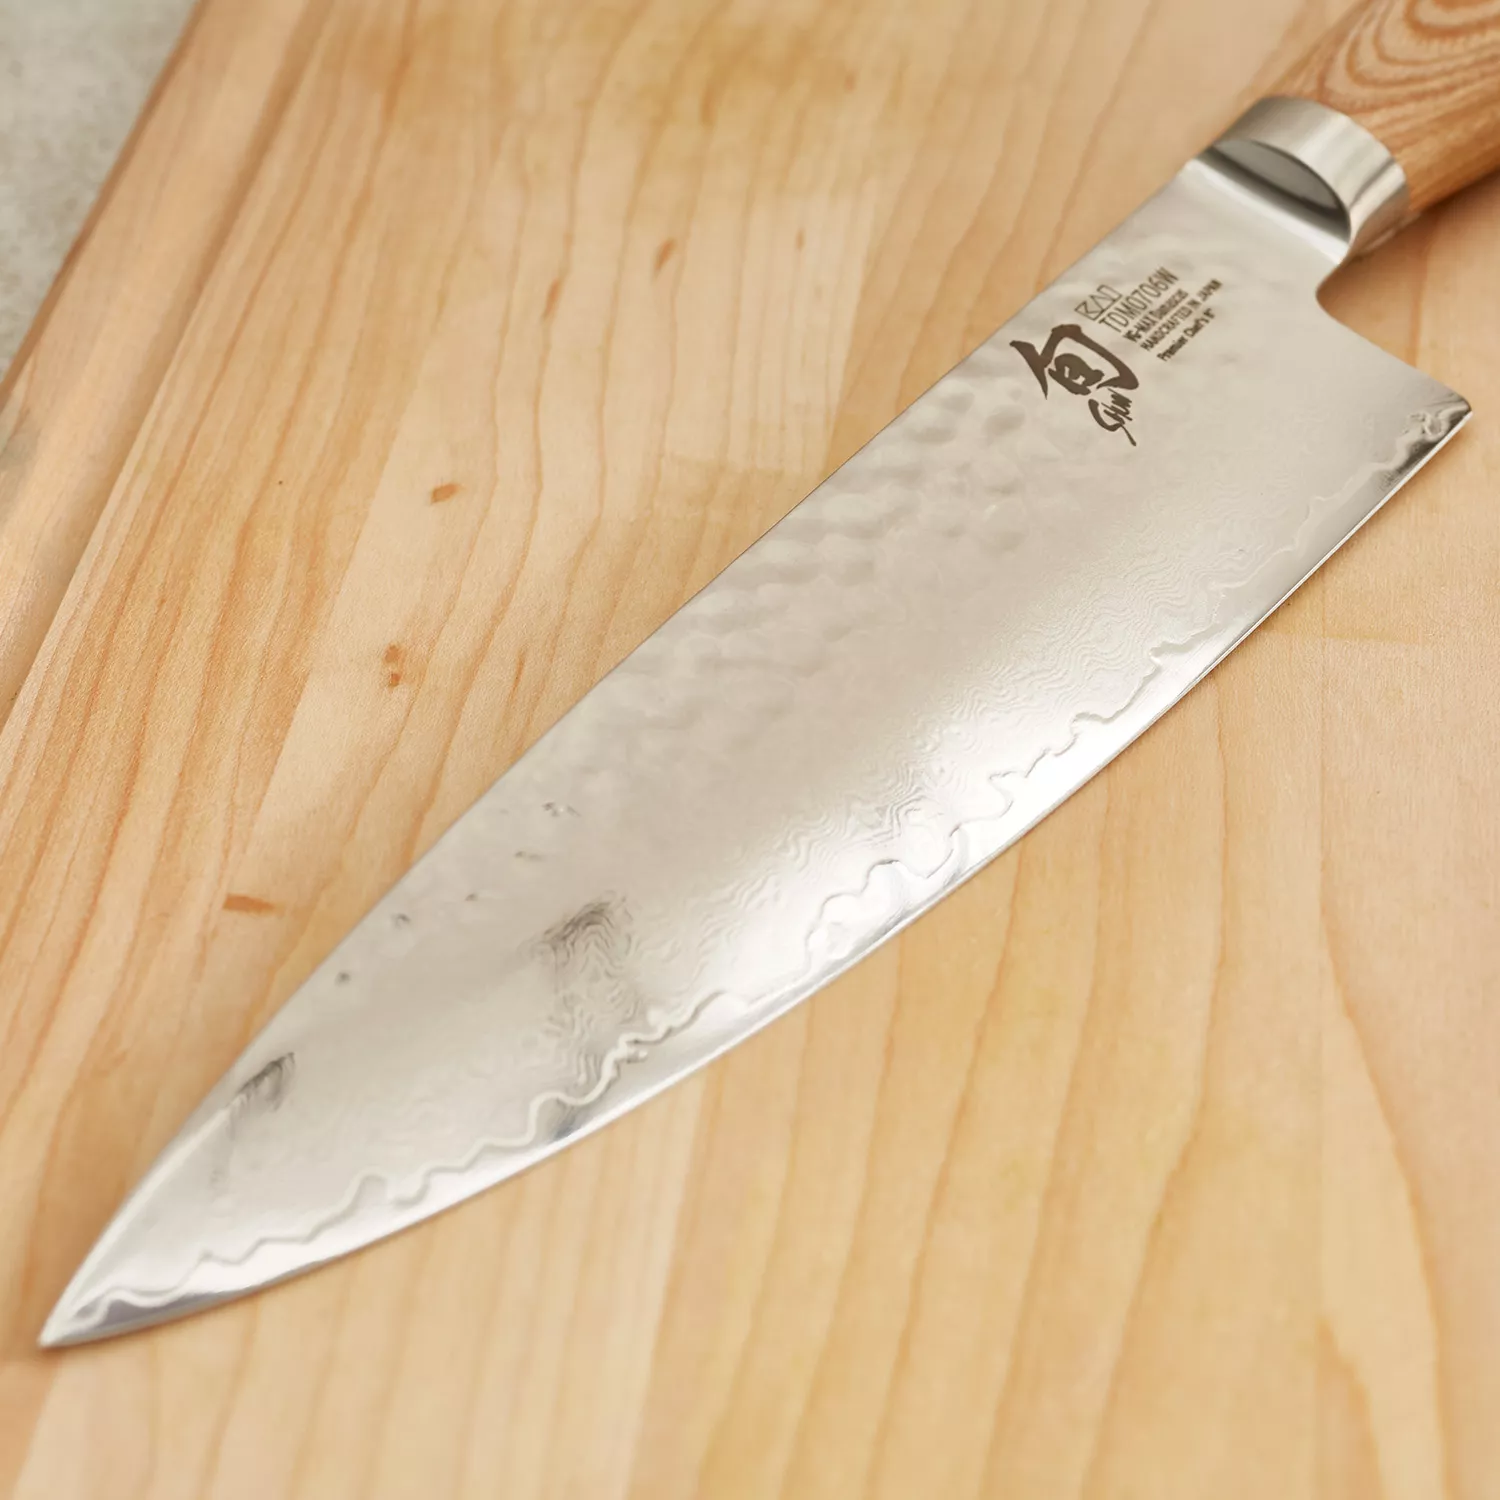 Shun Premier 8 Cook's / Chef's Knife - Blonde